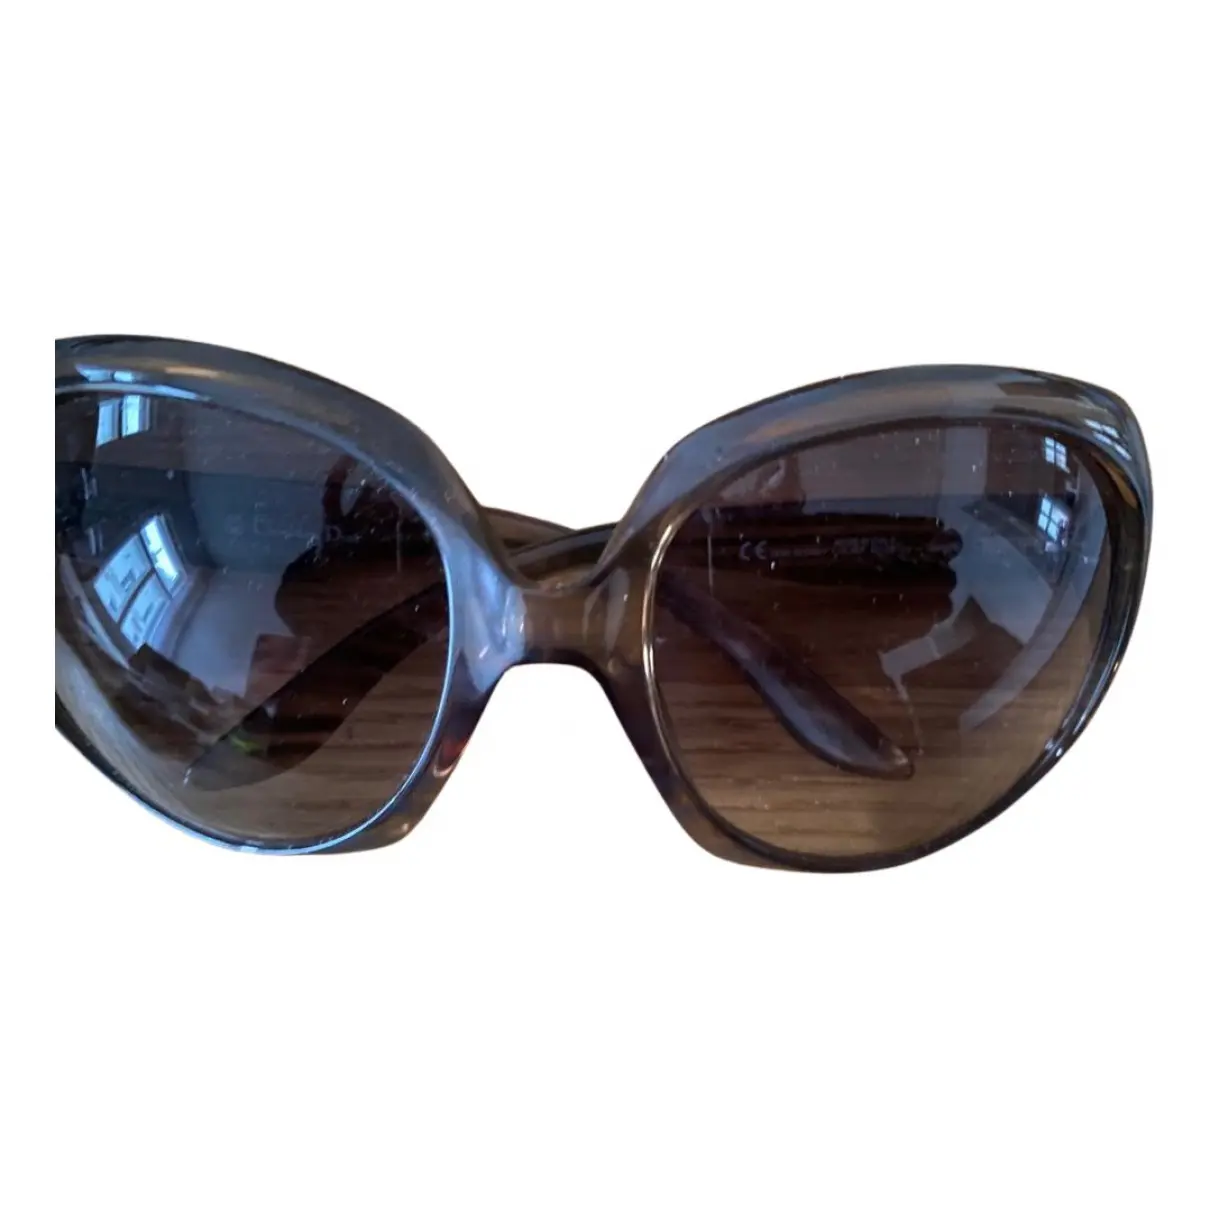 Buy Dior Sunglasses online